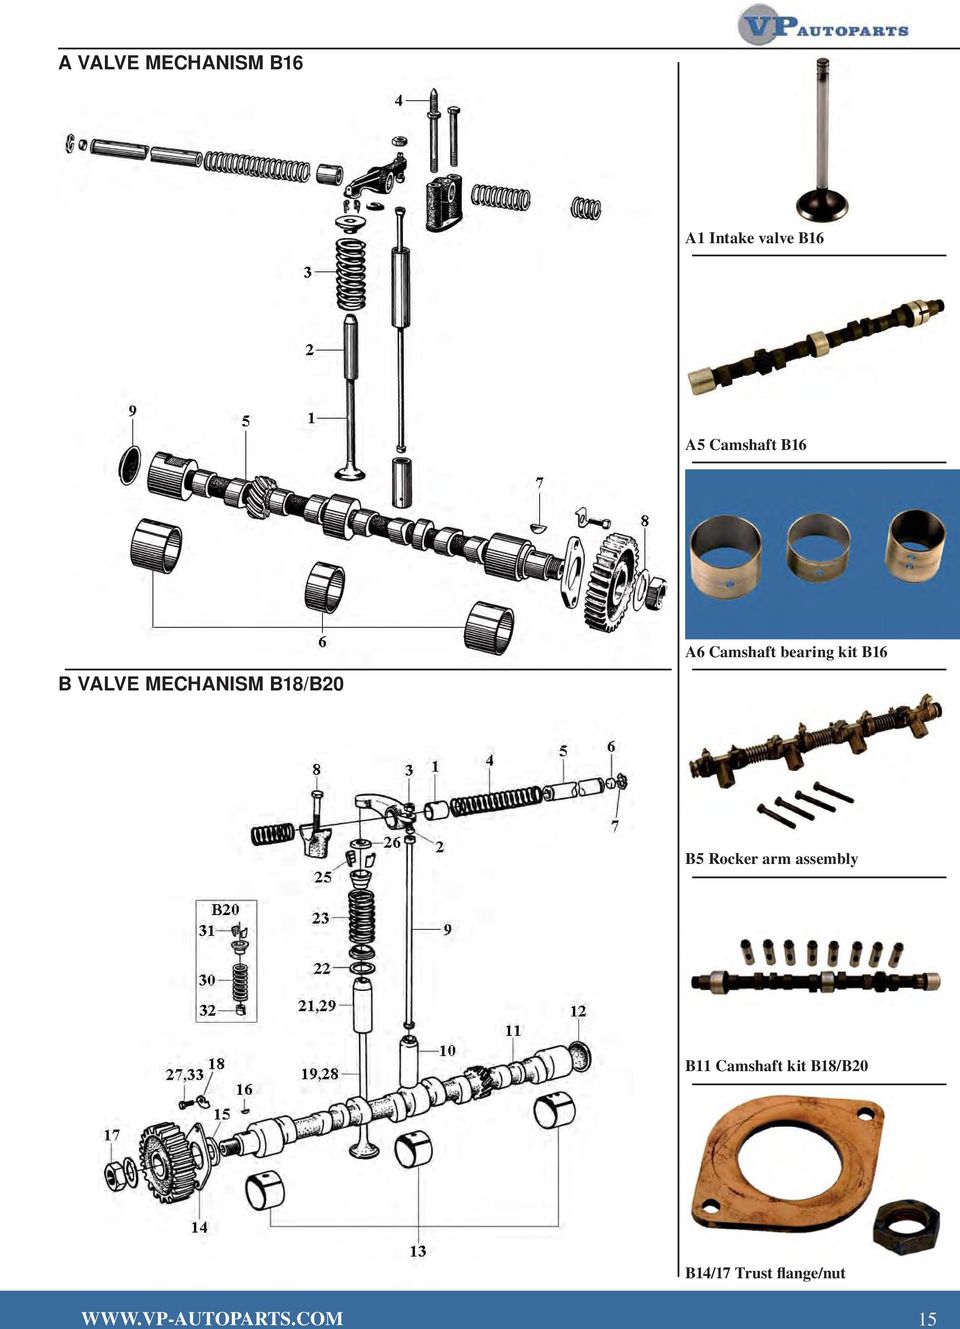 Camshaft bearing kit B16 B5 Rocker arm assembly B11